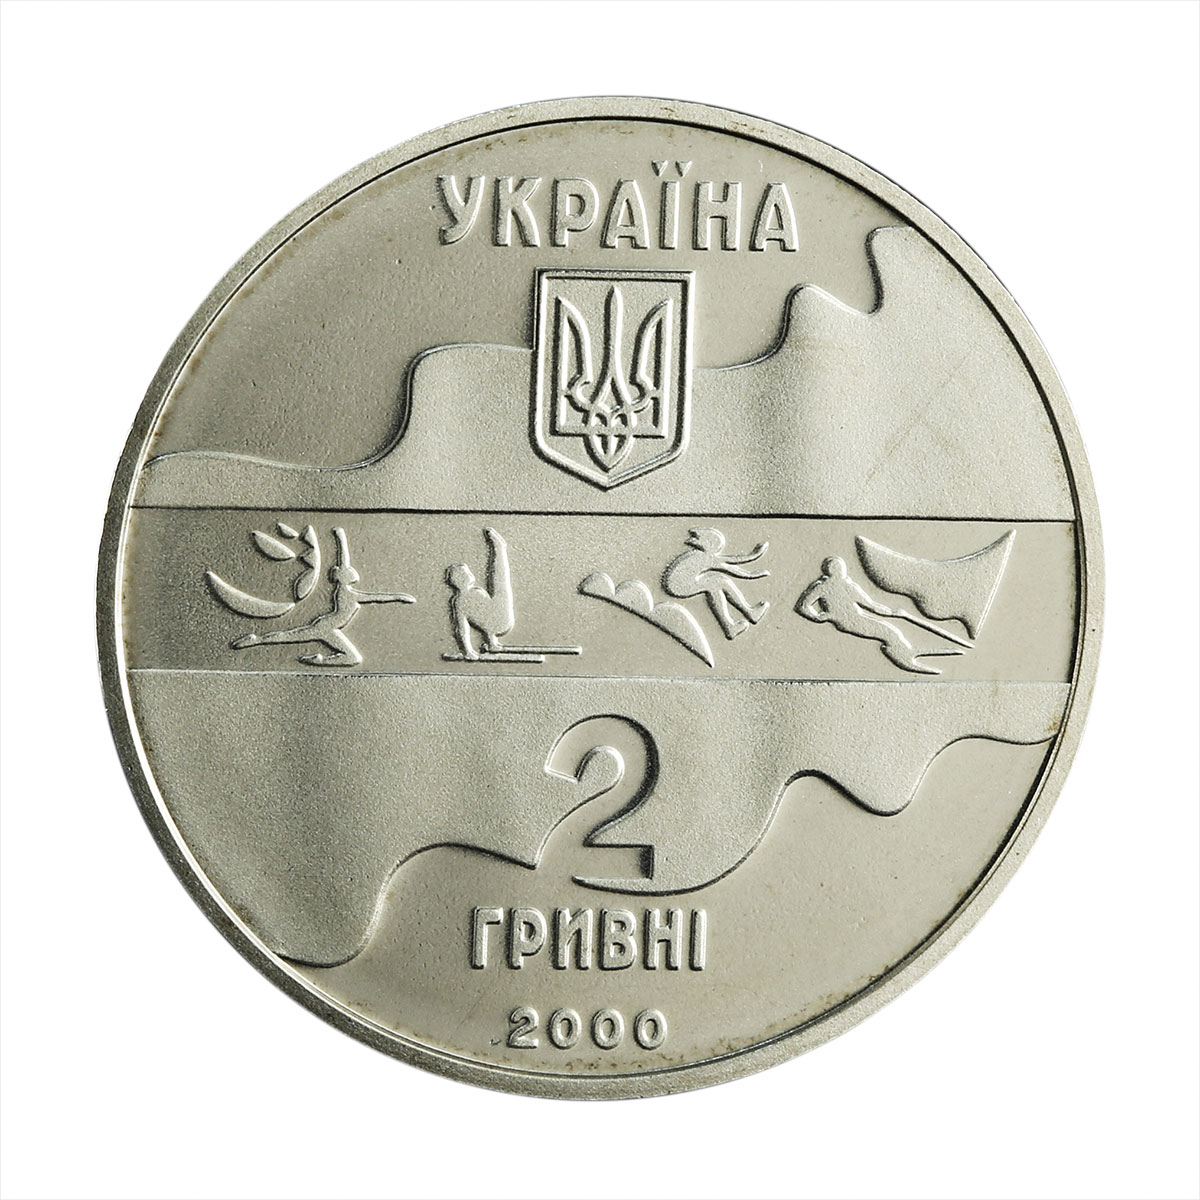 Ukraine 2 hryvnia Summer Olympic Games in Sydney Parallel bars nickel coin 2000